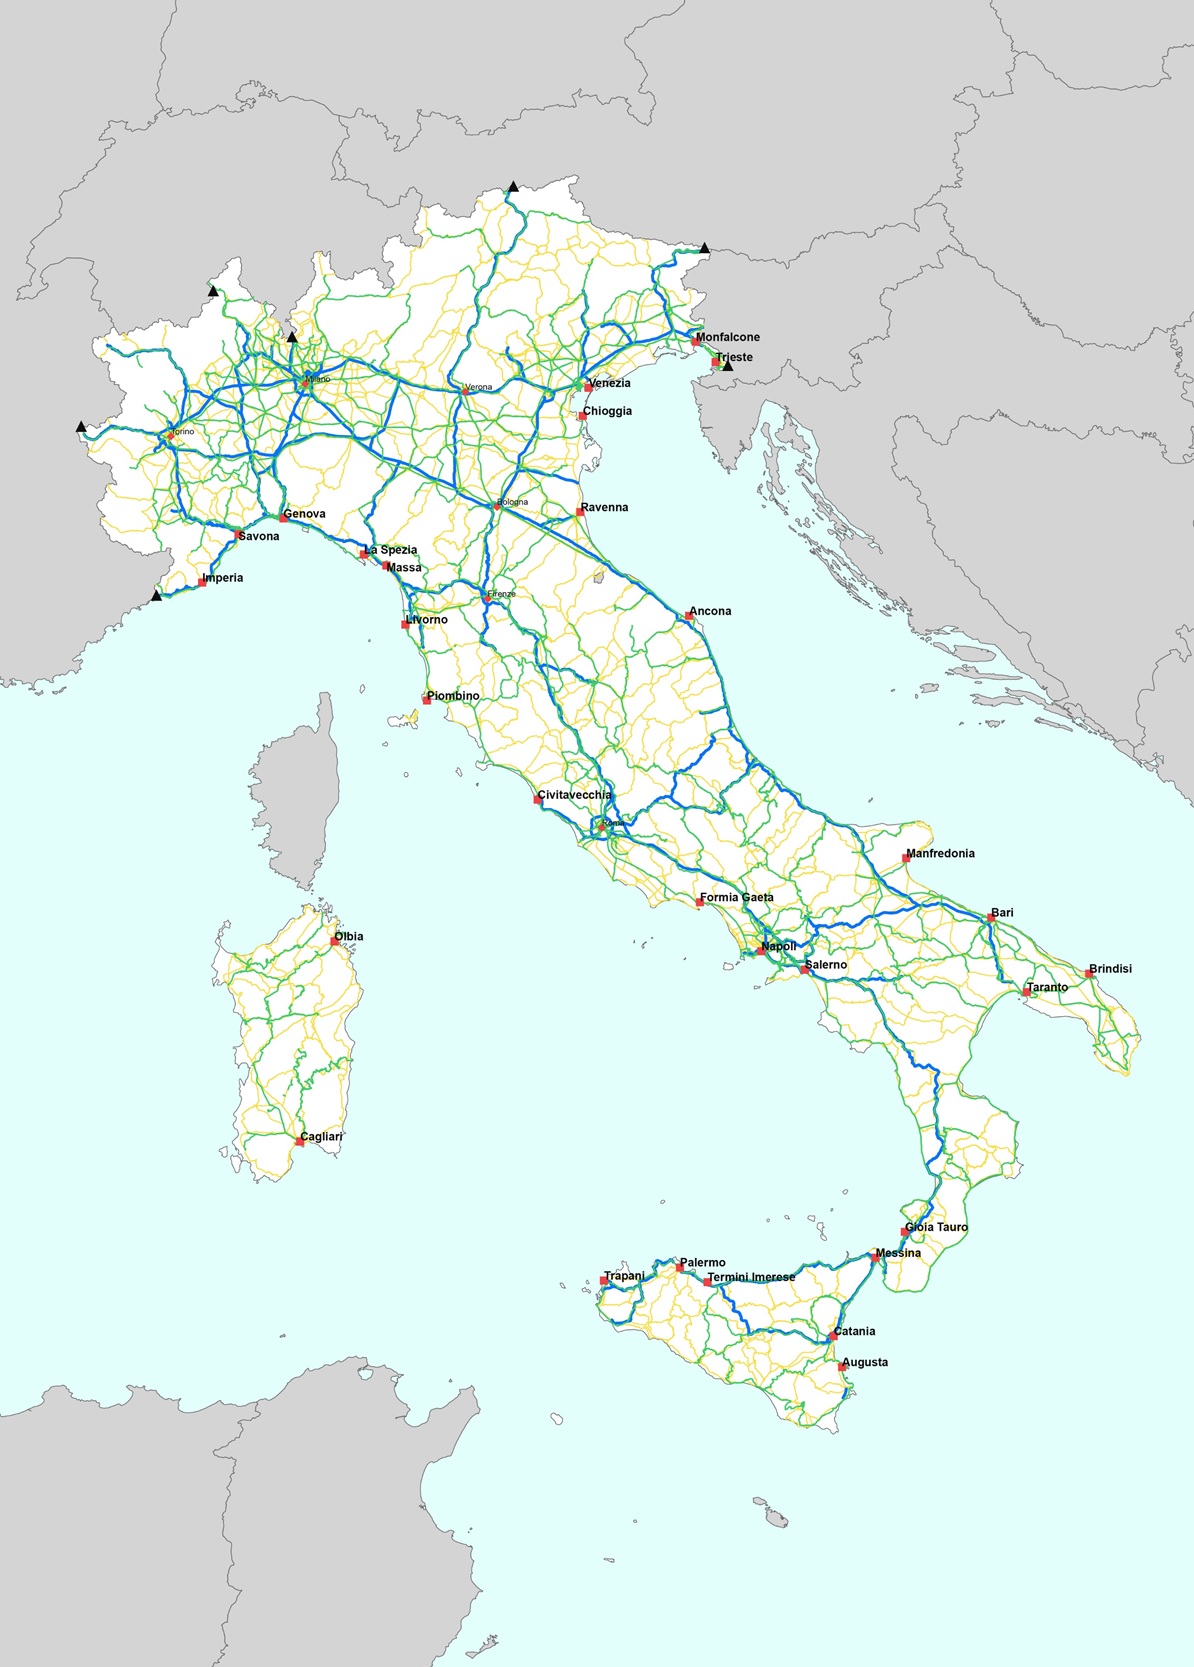 Systematica-Sea Motorways Program-Current Road Network